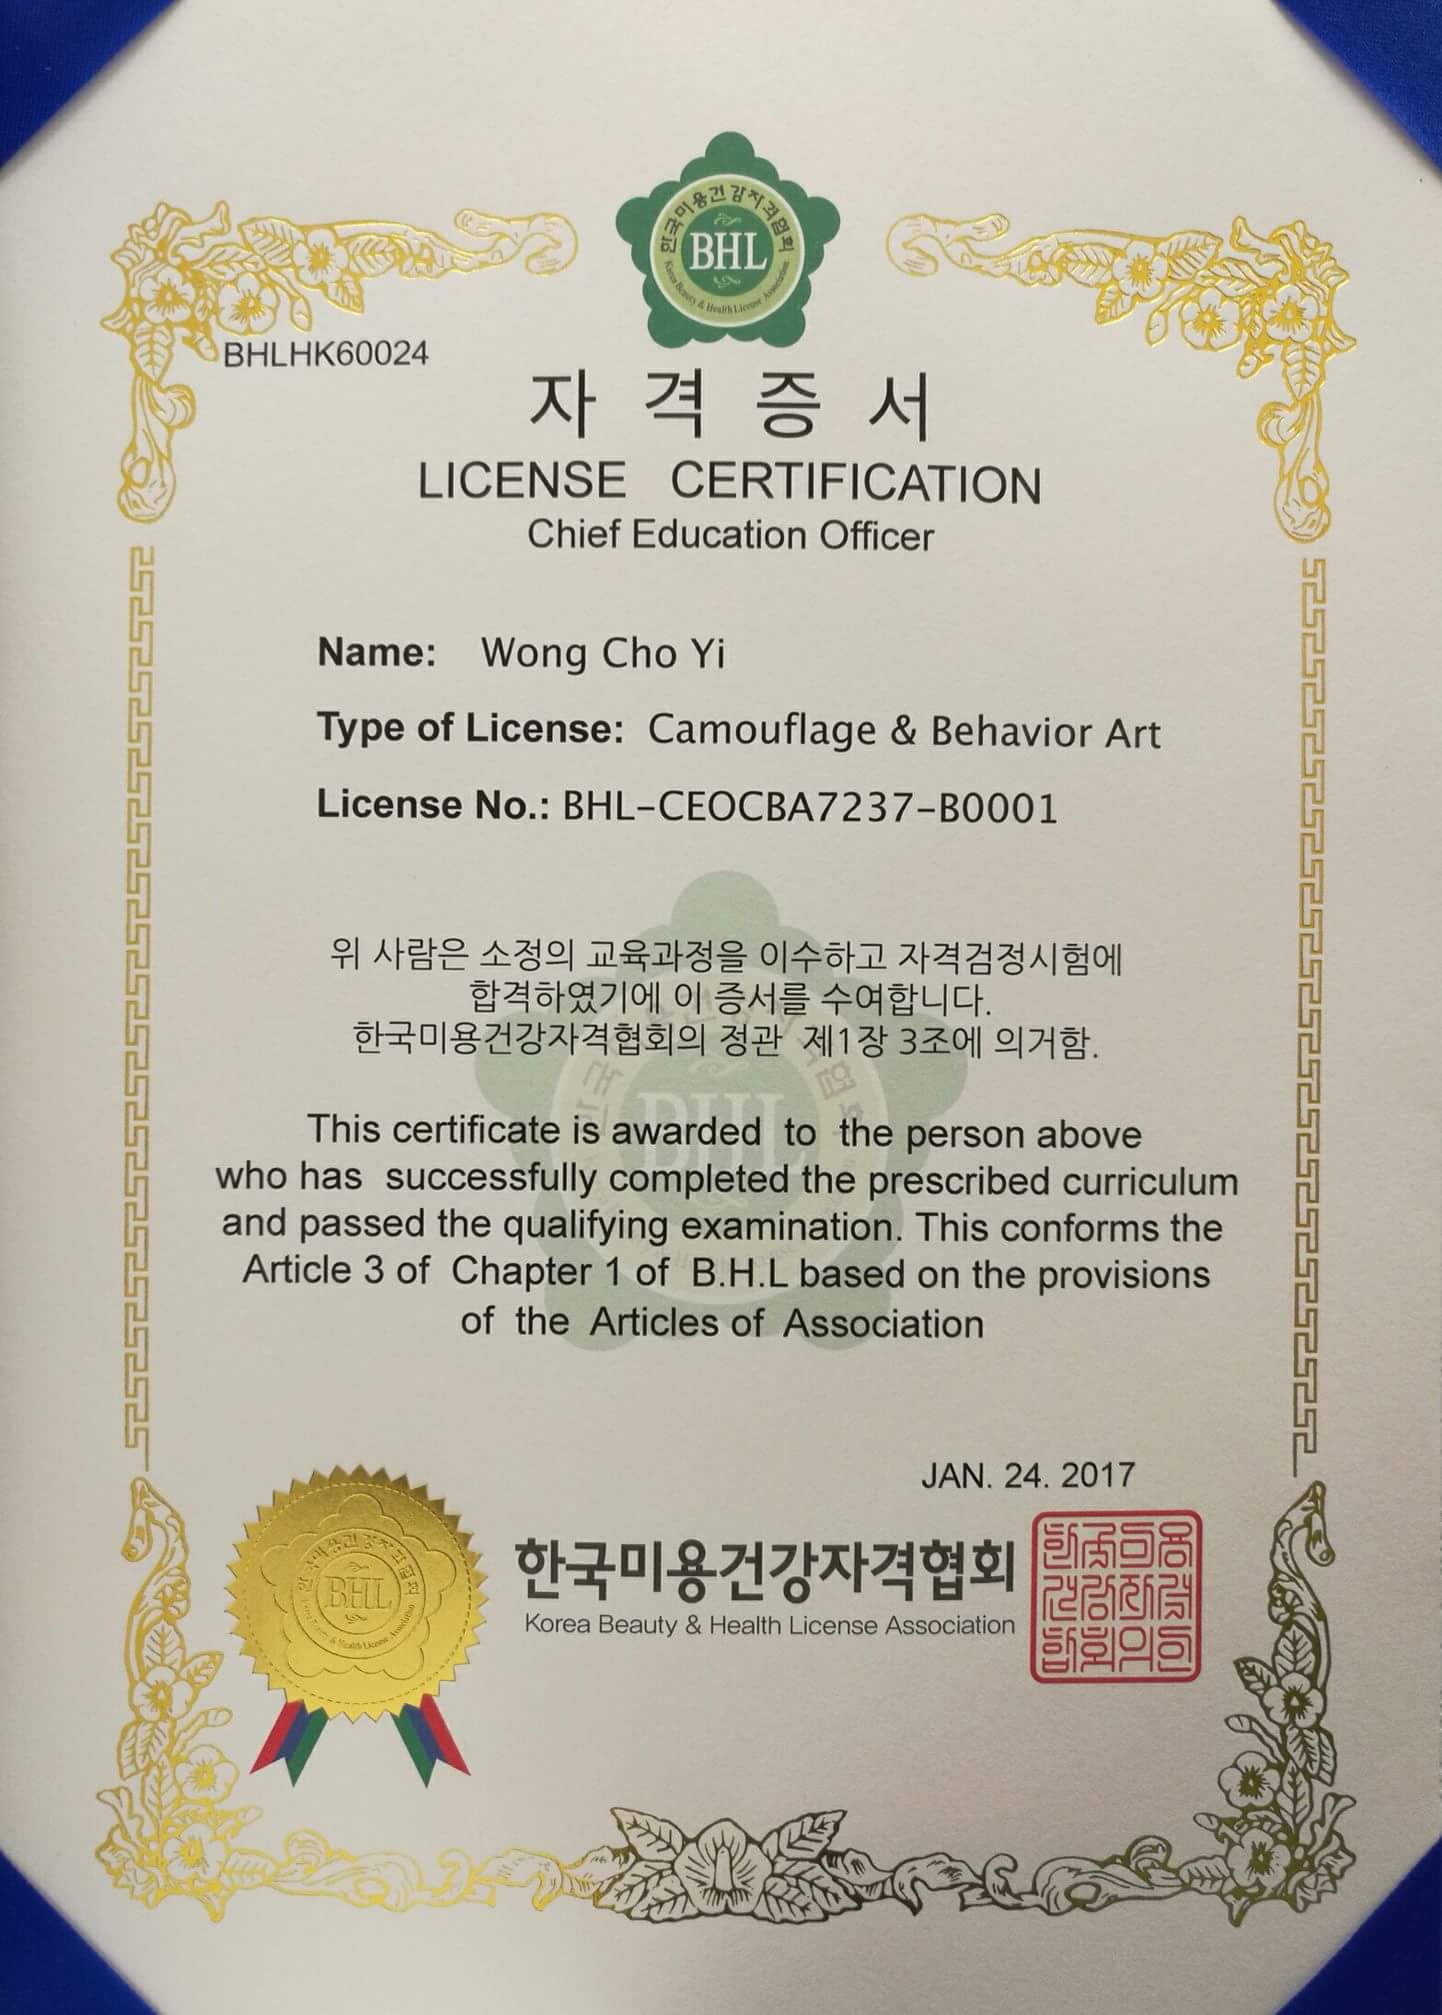 Korea IHOOC BHL IBHGU KOREA Beauty & Health License Association License Certification Chief Education Officer Camouflage & Behavior Art